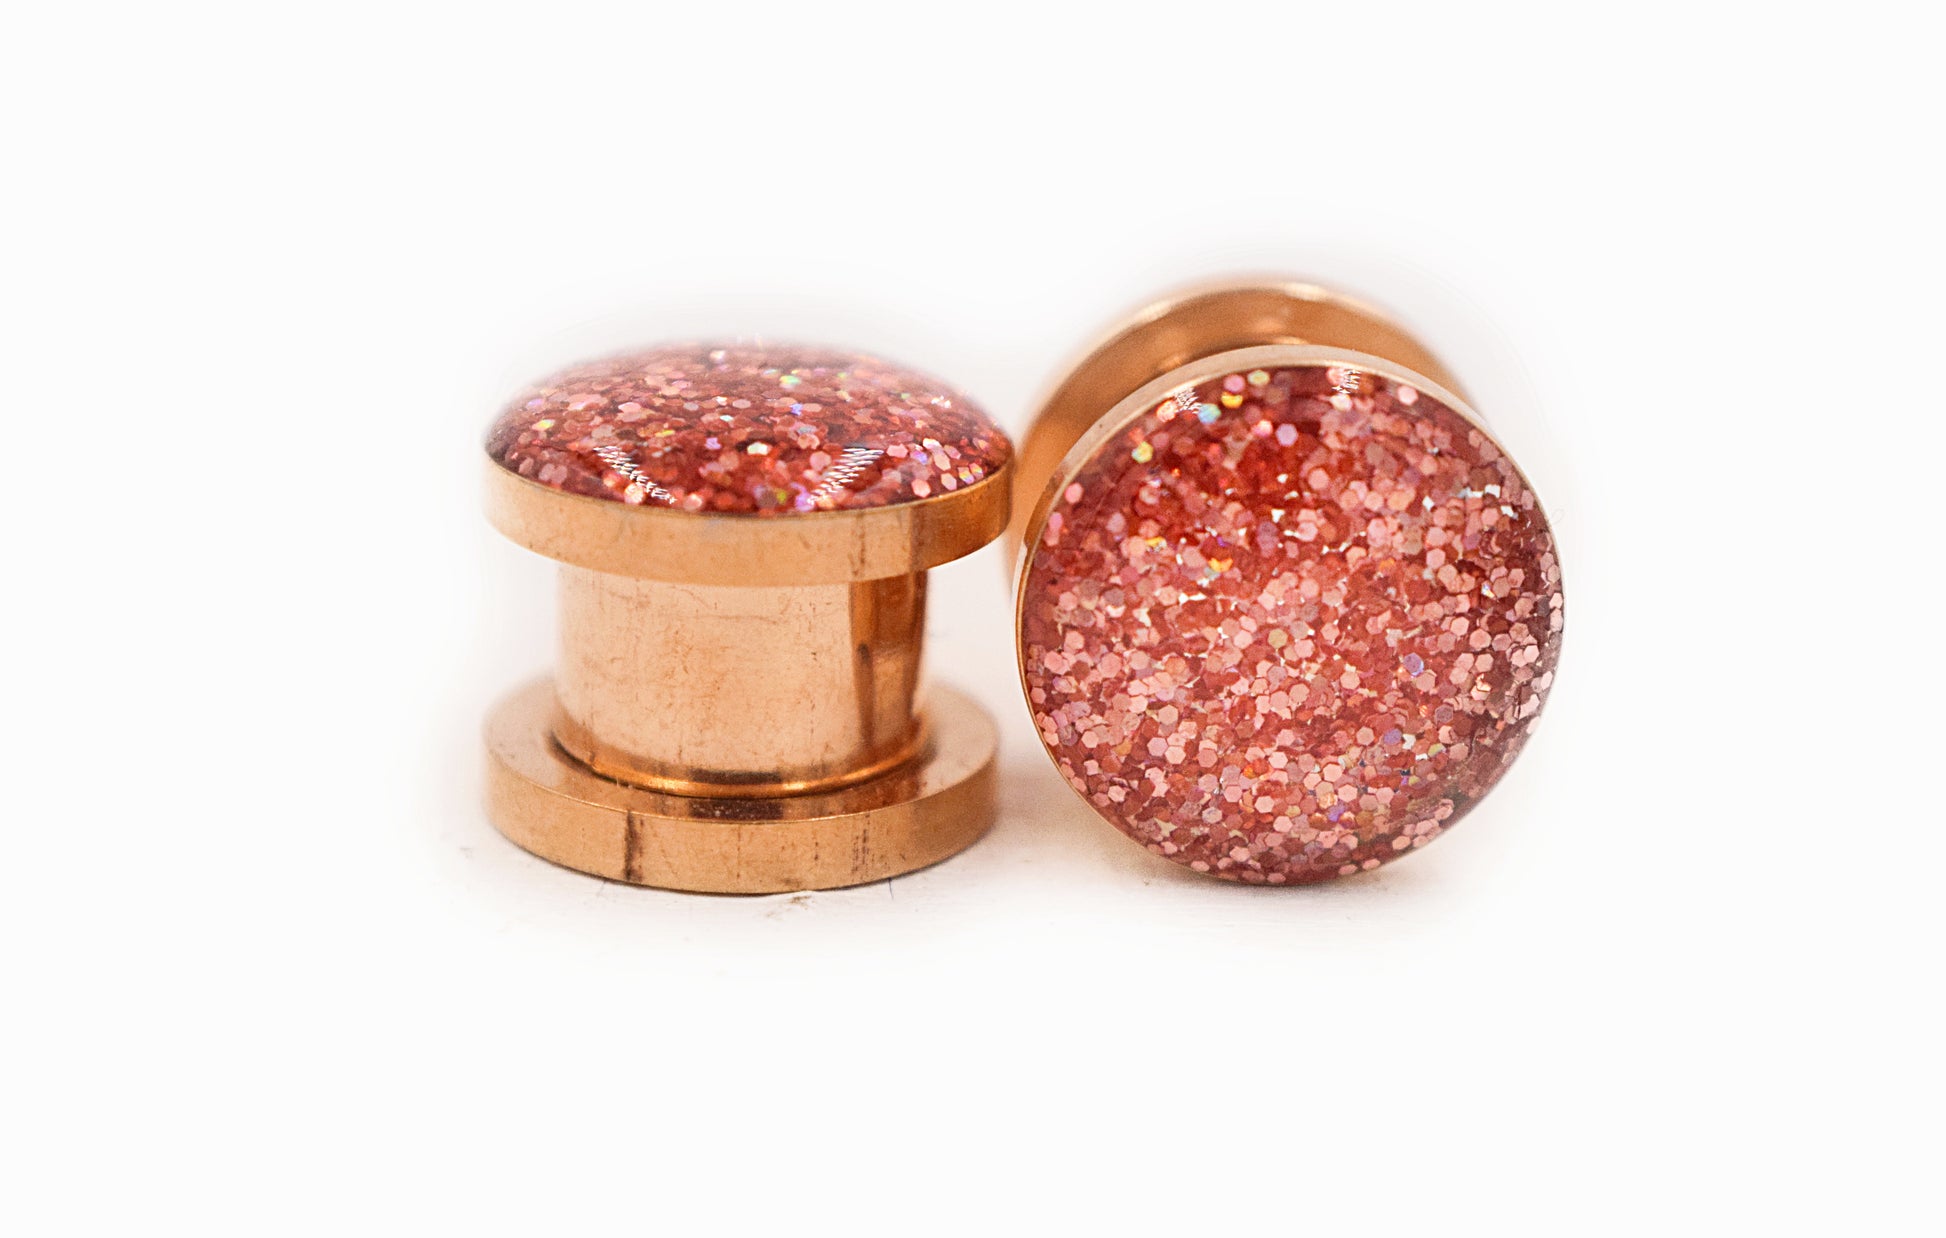 Rose Gold Iridescent Sparkle plugs - Defiant Jewelry